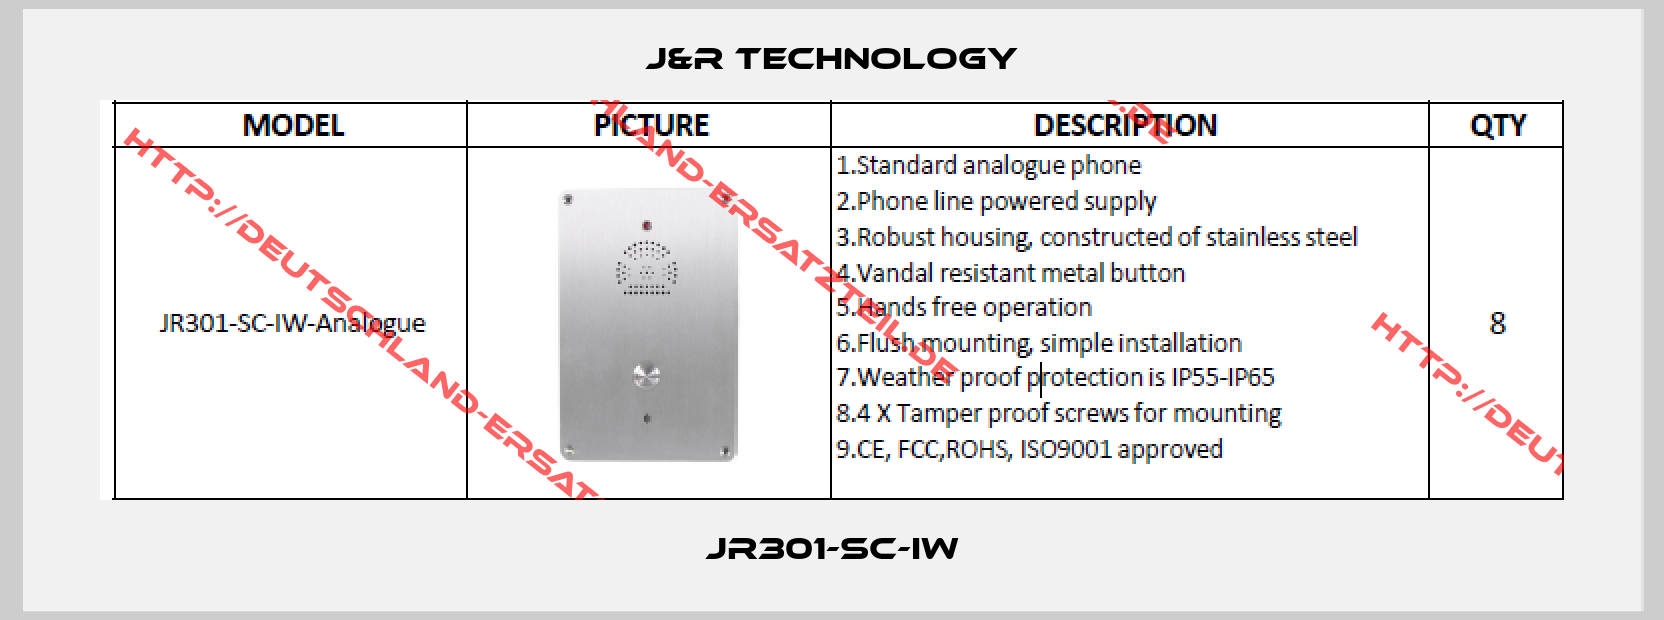 J&R Technology-JR301-SC-IW